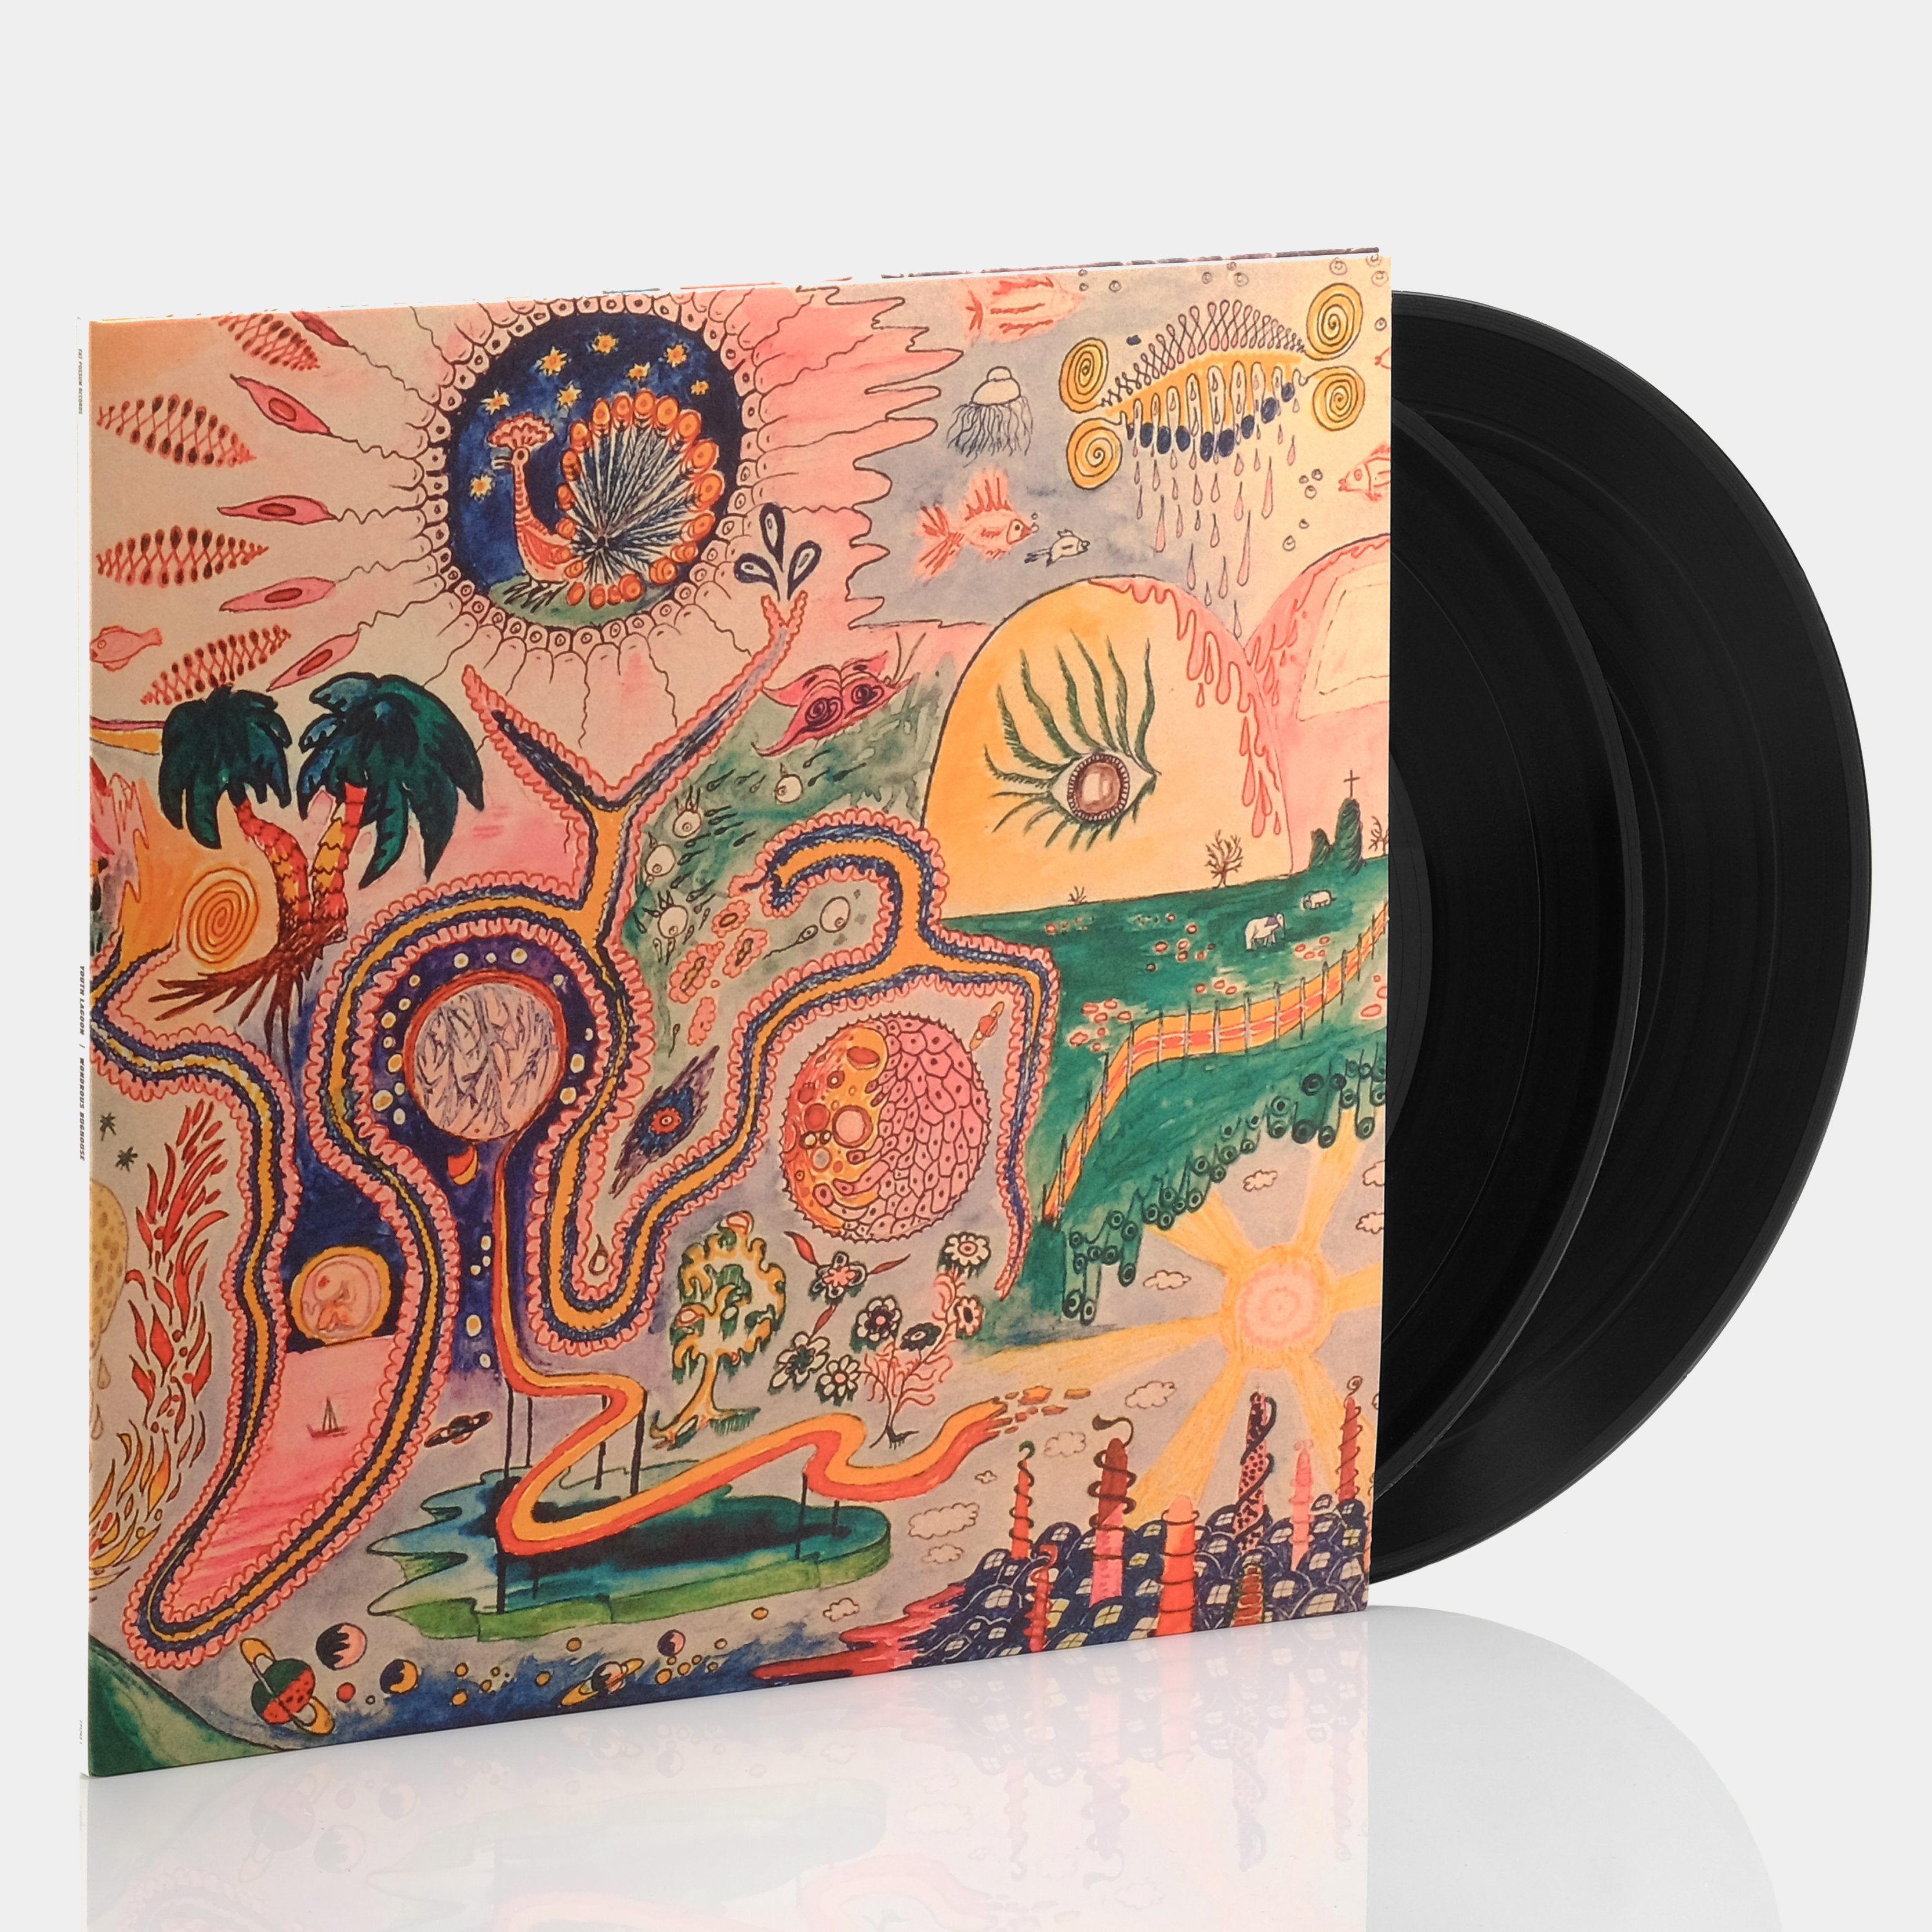 Youth Lagoon - Wondrous Bughouse 2xLP Vinyl Record